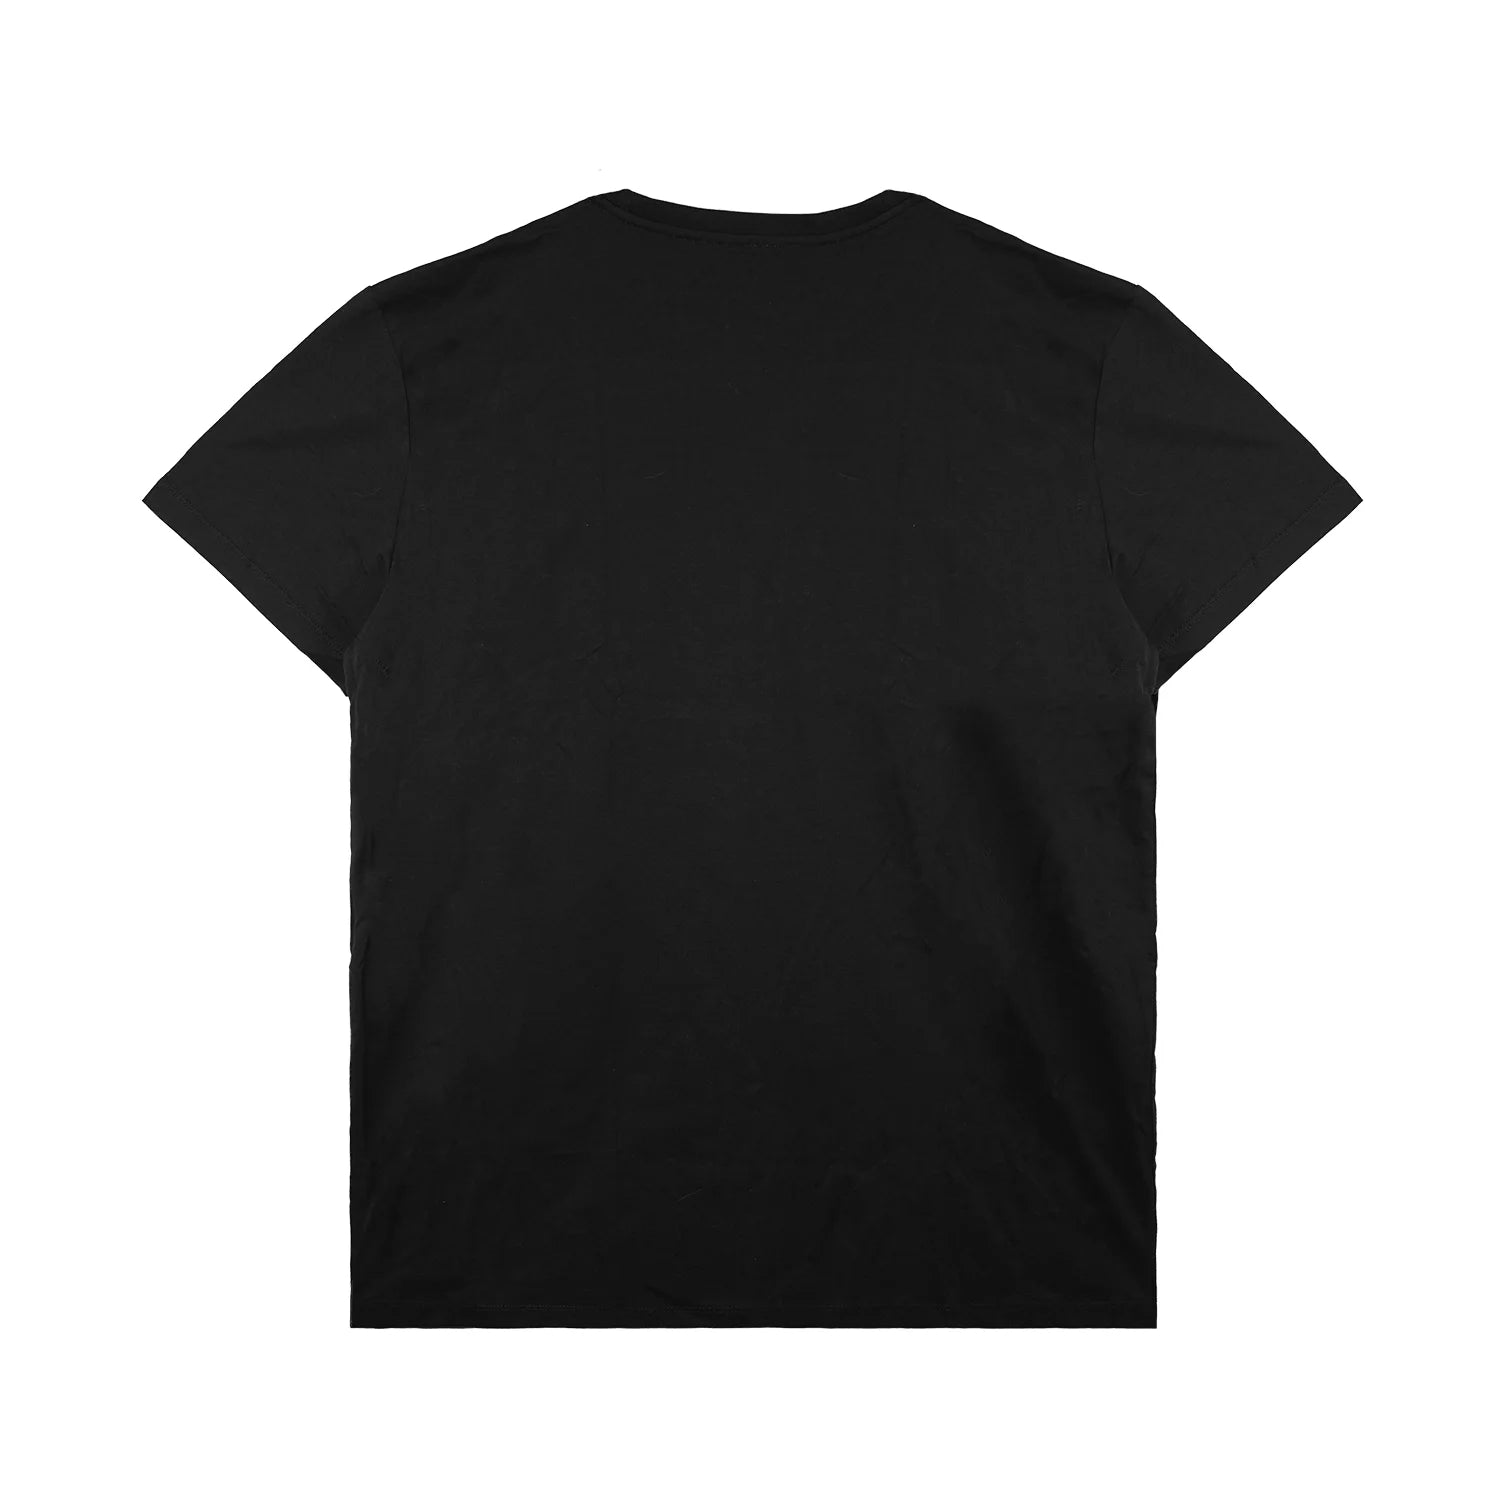 SnapFresh T-shirts (Black)